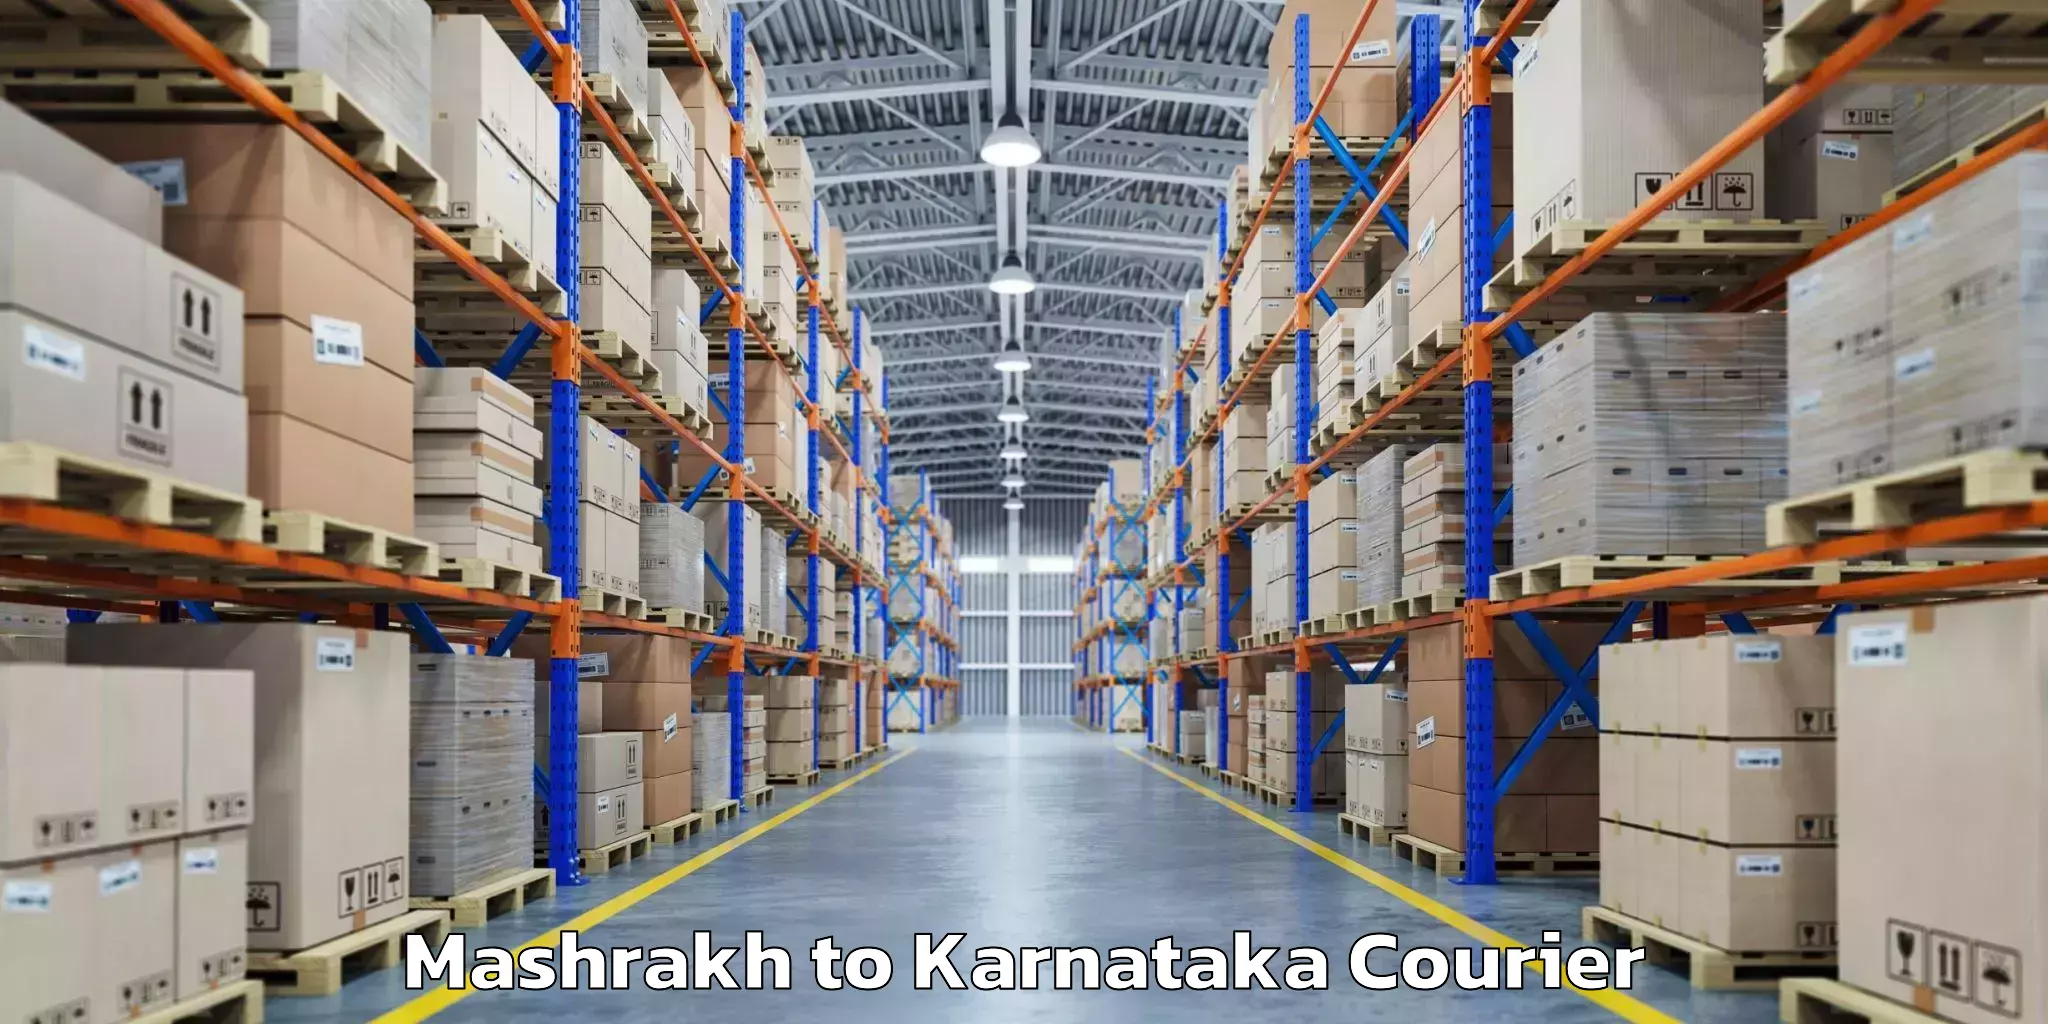 Baggage transport network Mashrakh to Karnataka